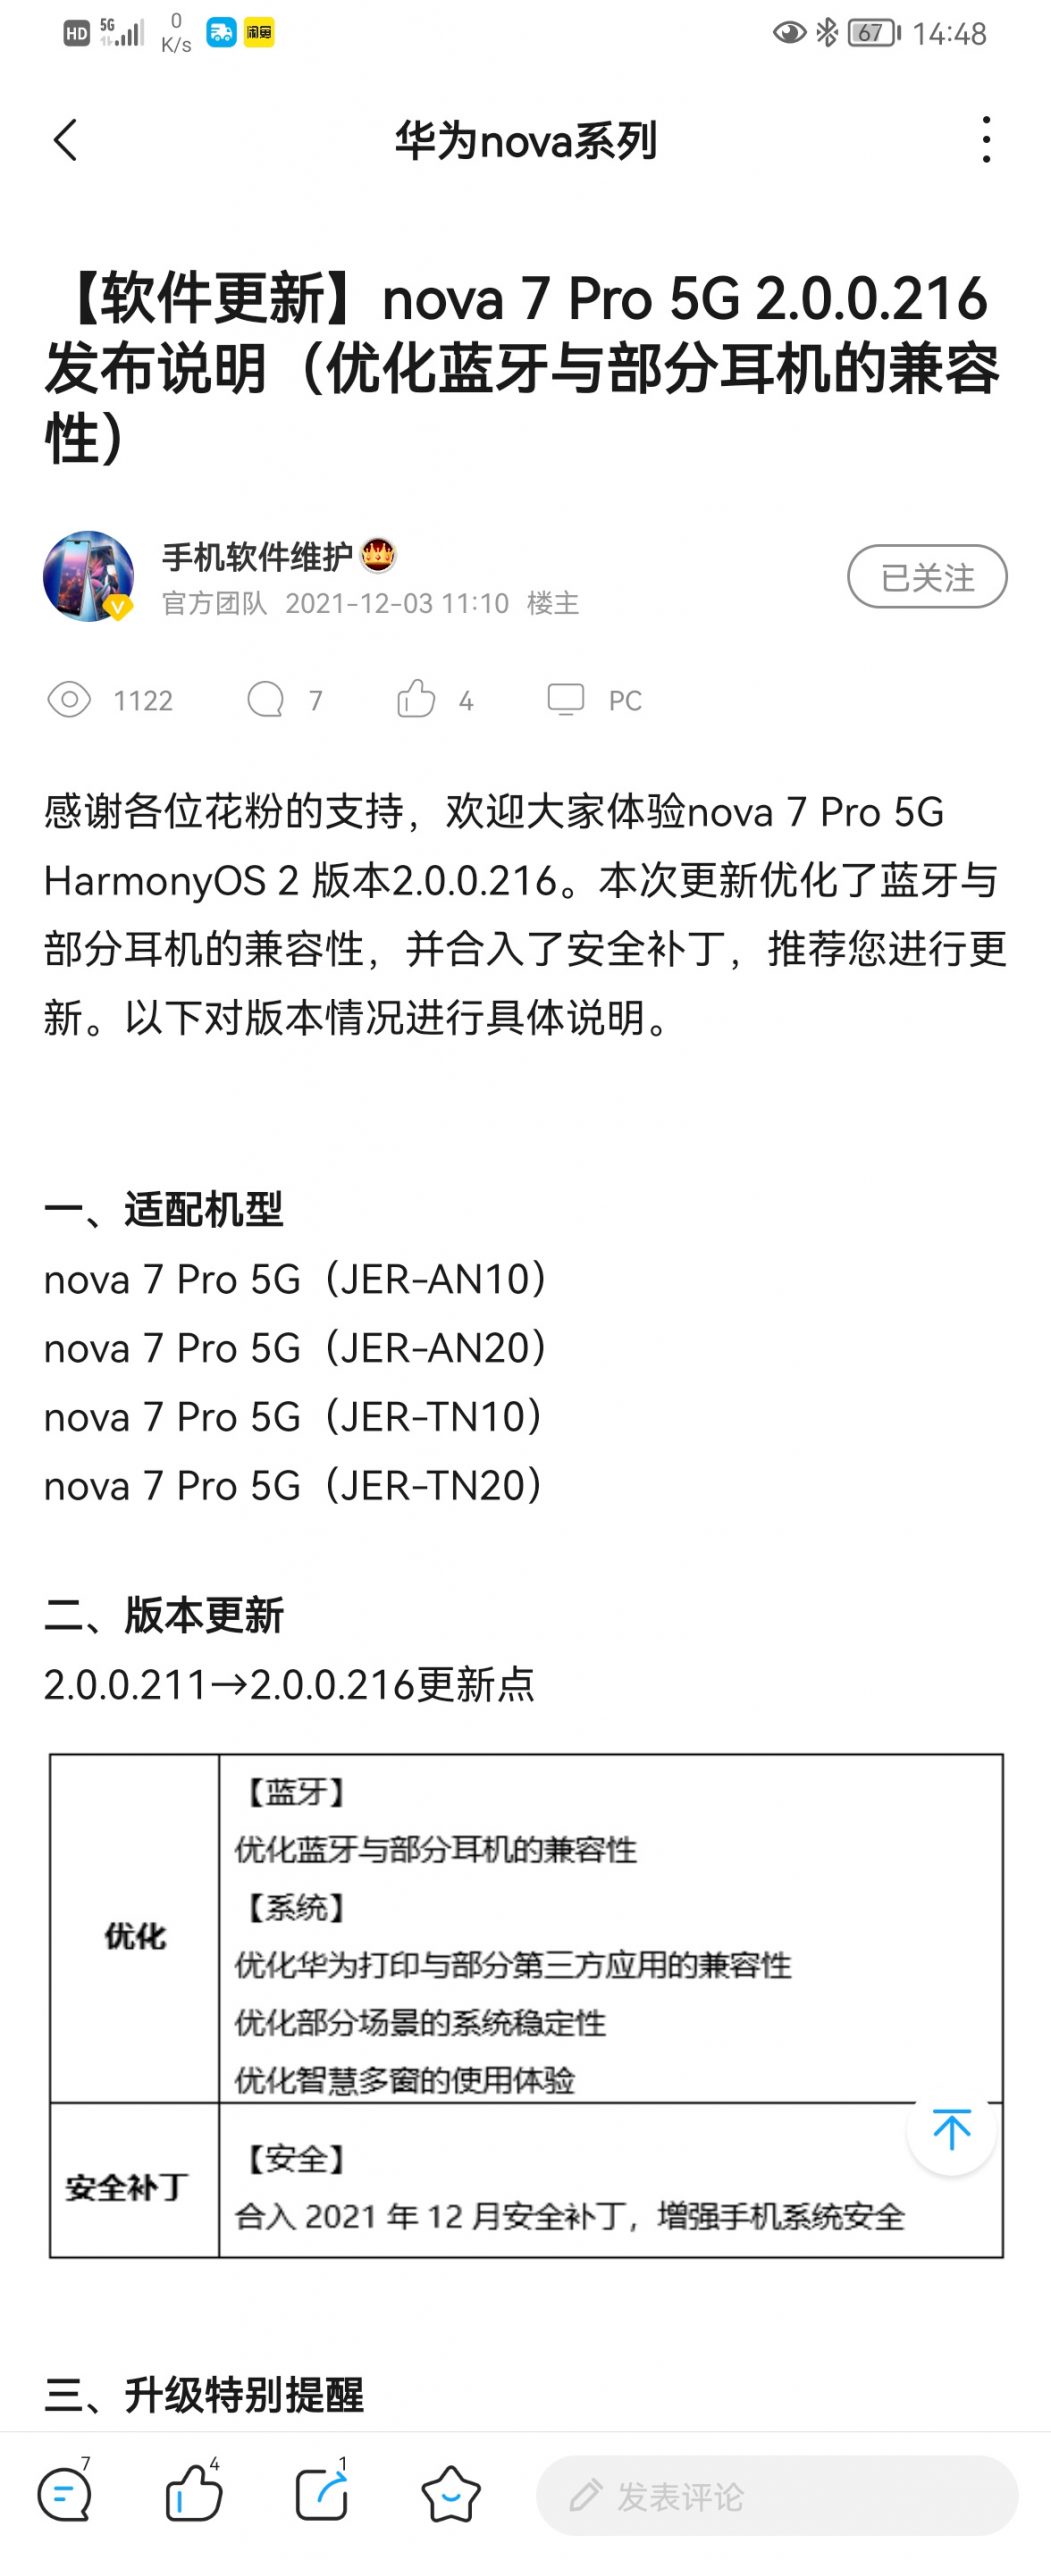 Huawei Nova 7 Pro getting HarmonyOS 2.0.0.216 update